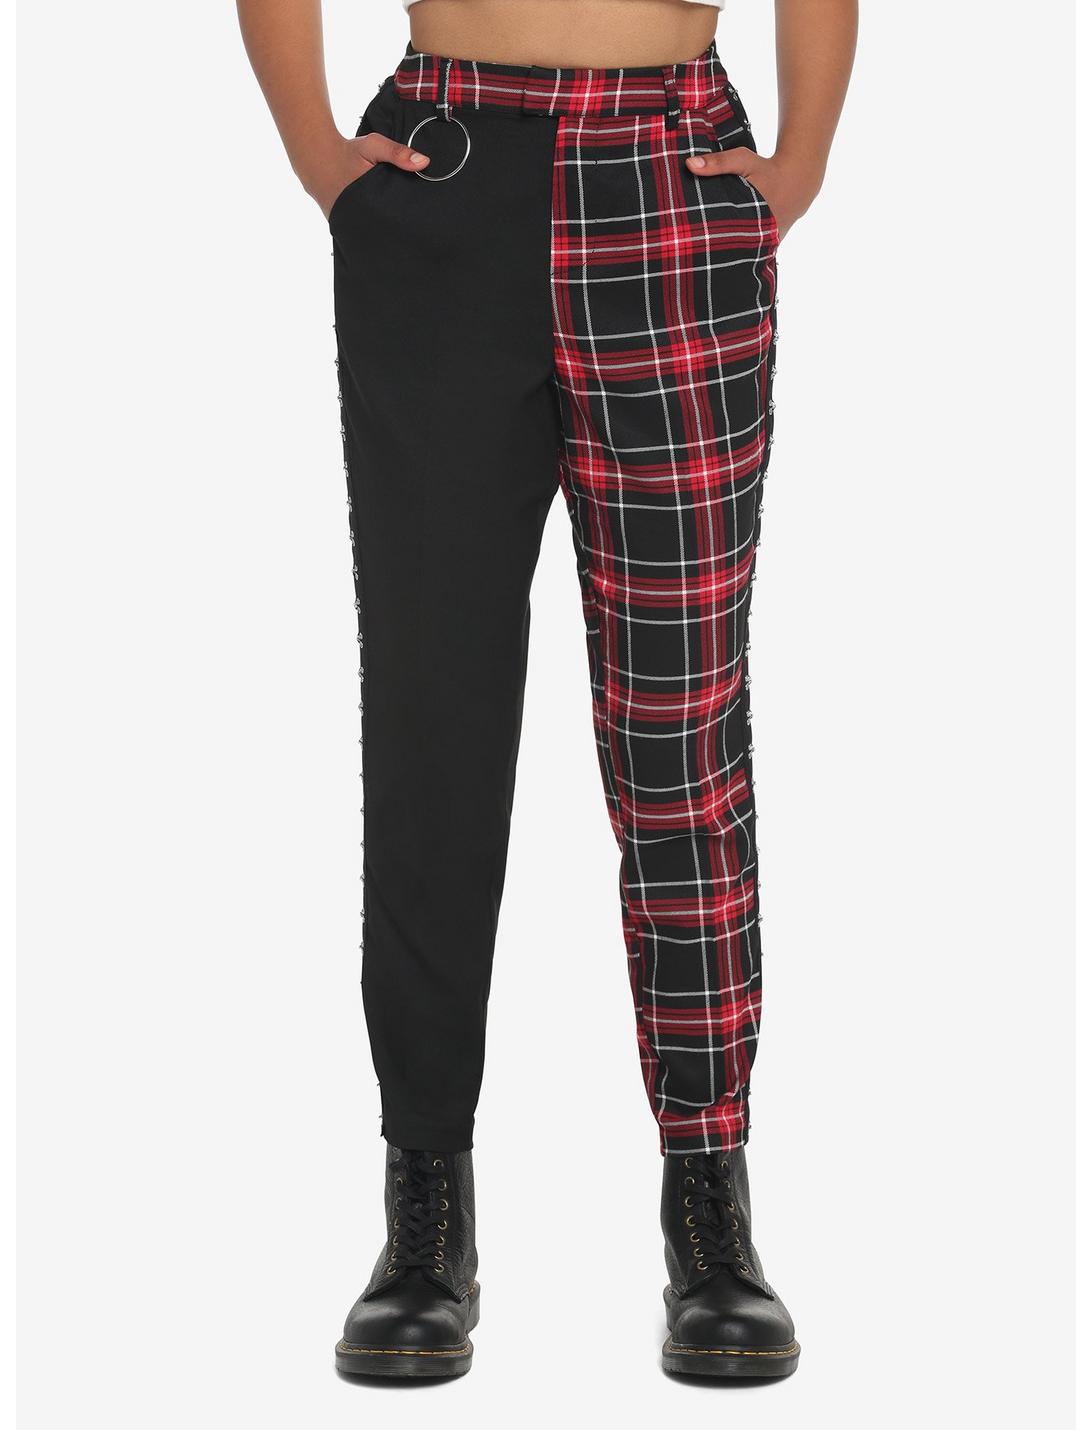 Black & Red Plaid Split Pants, BLACK  RED, hi-res